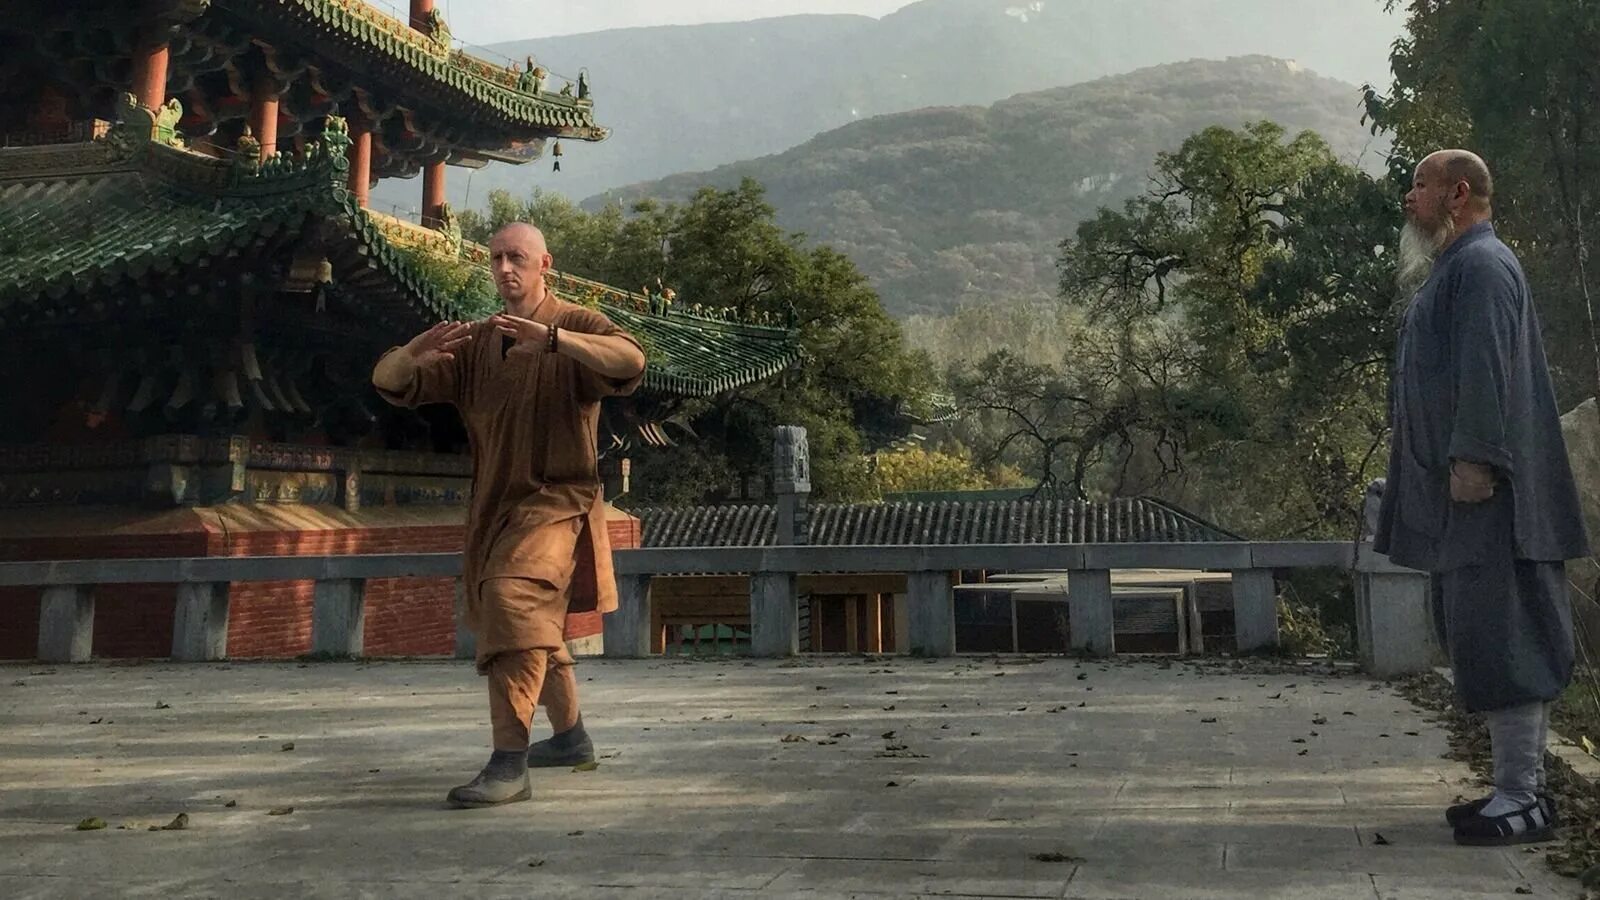 Shaolin temple. Кунг-фу монастырь Шаолинь. Шаолинь Чжэнчжоу. Китай Шаолинь монастырь арт. Храм монахов Шаолинь.